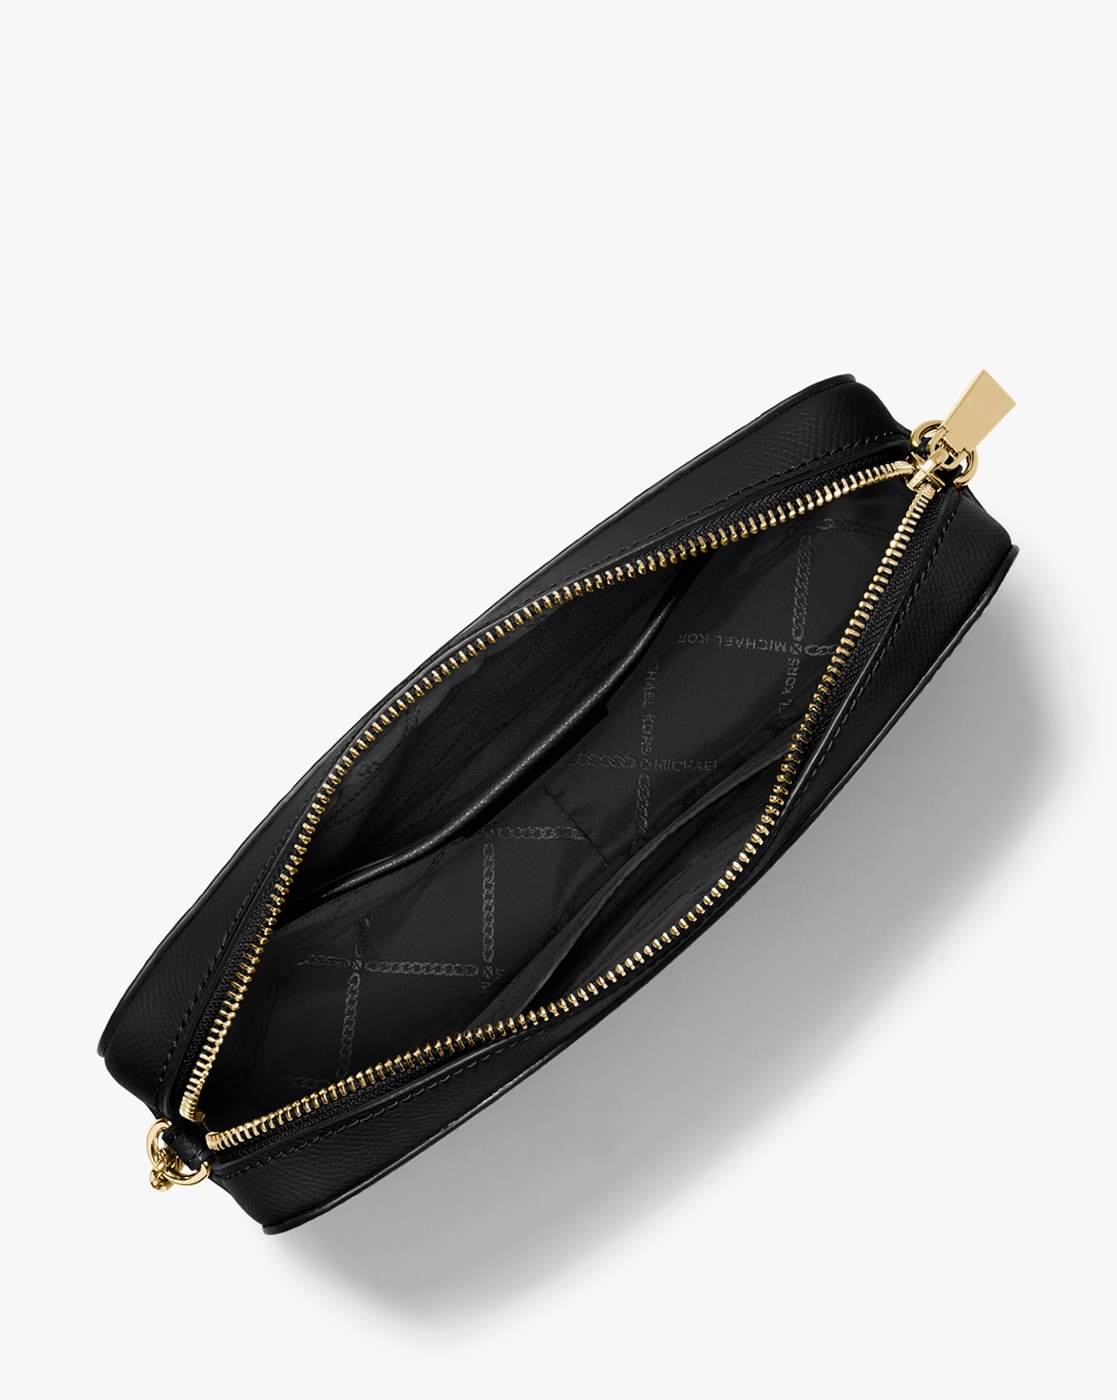 MICHAEL KORS ☜UNBOXING☞ Jet Set Large Saffiano Leather Crossbody Bag /  Black 